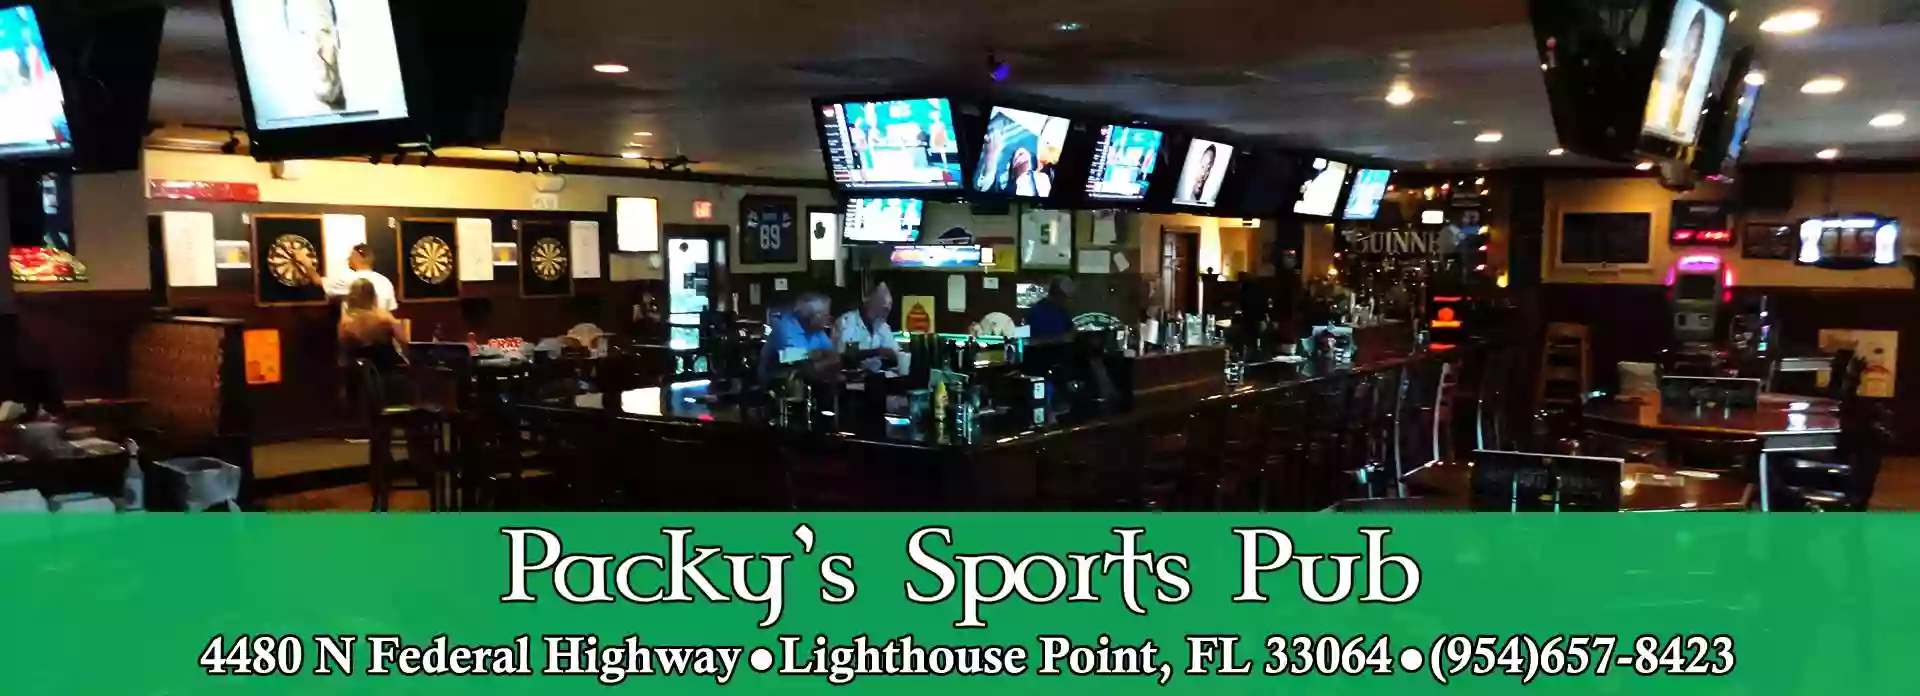 Packy's Sports Pub